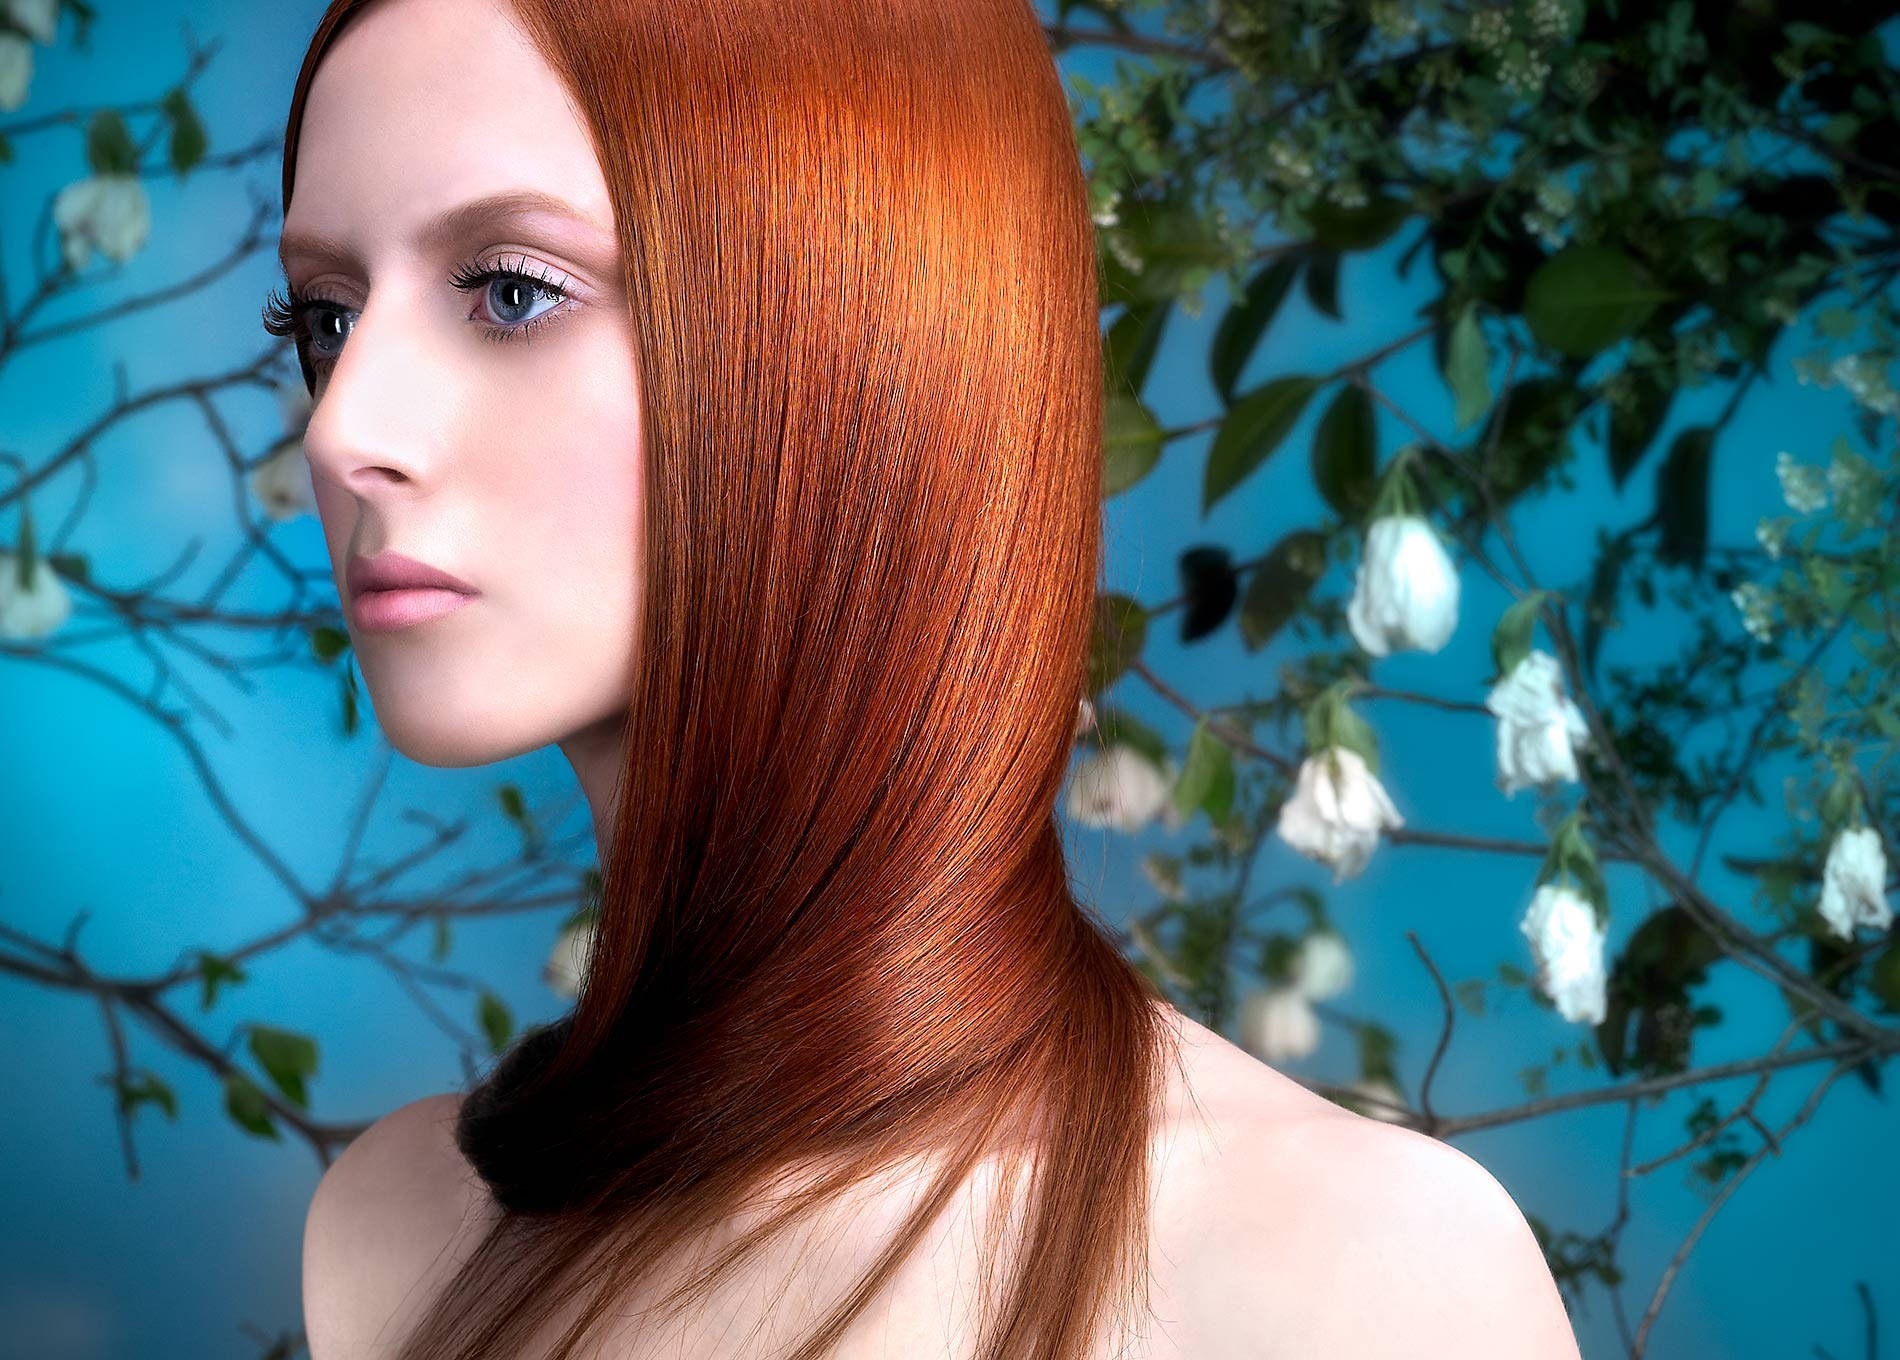 Beautiful Hd Model With Reddish Hair